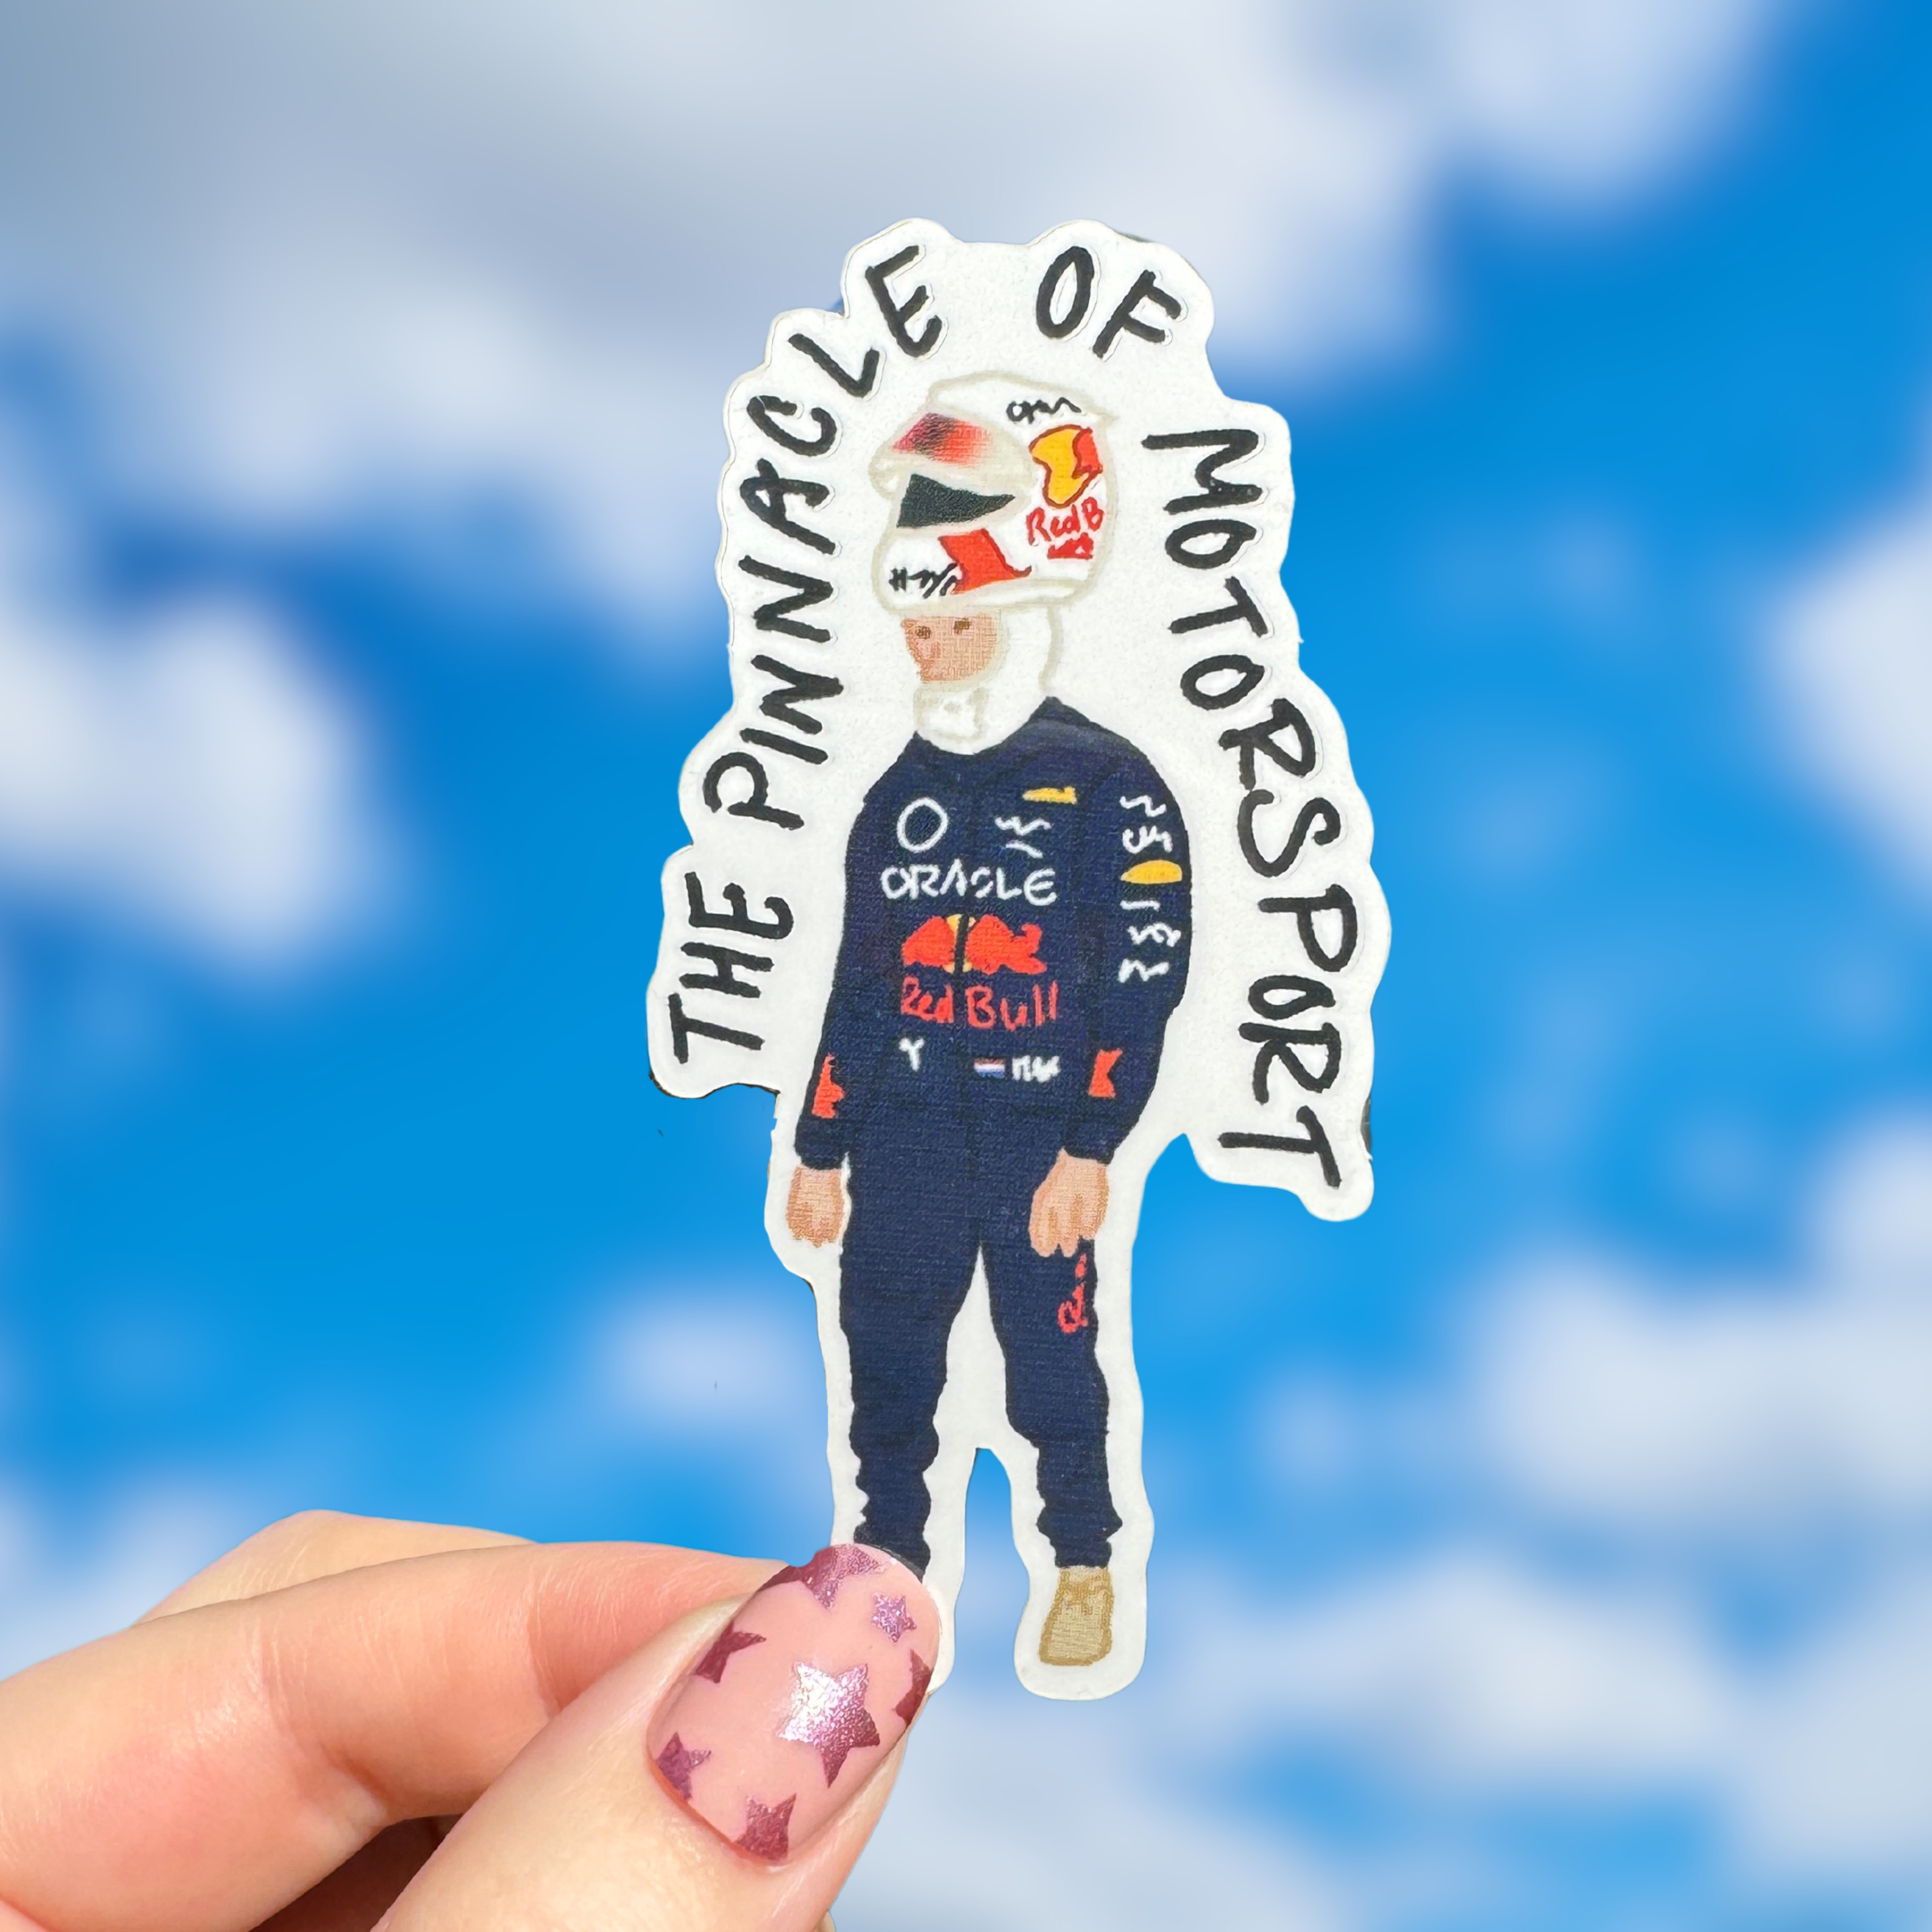 Max Verstappen "Pinnacle of Motorsport" sticker